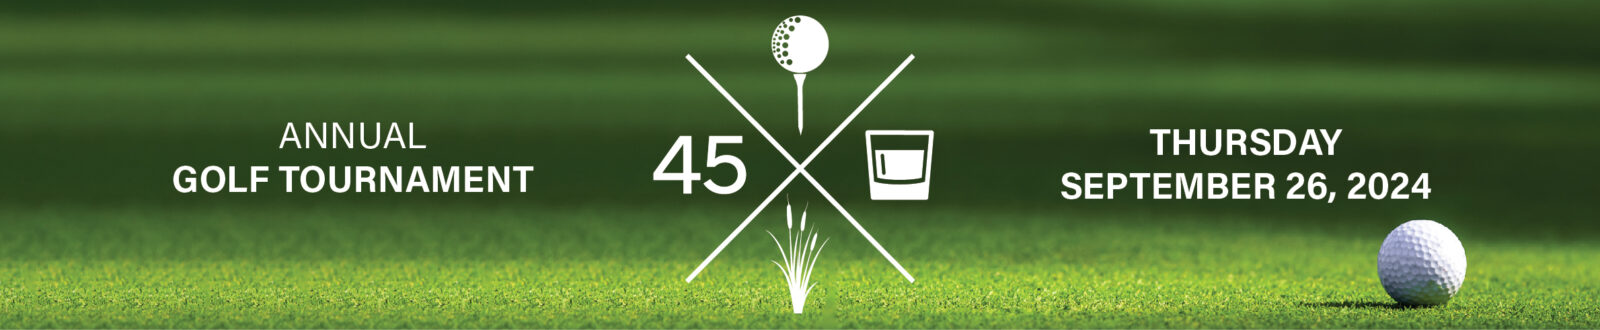 Annual Golf Tournament - Thursday, September 26, 2024 9:00 AM to 5:00 PM